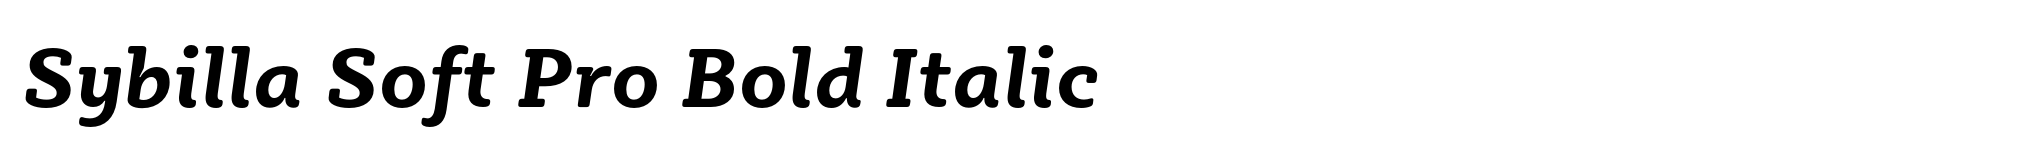 Sybilla Soft Pro Bold Italic image